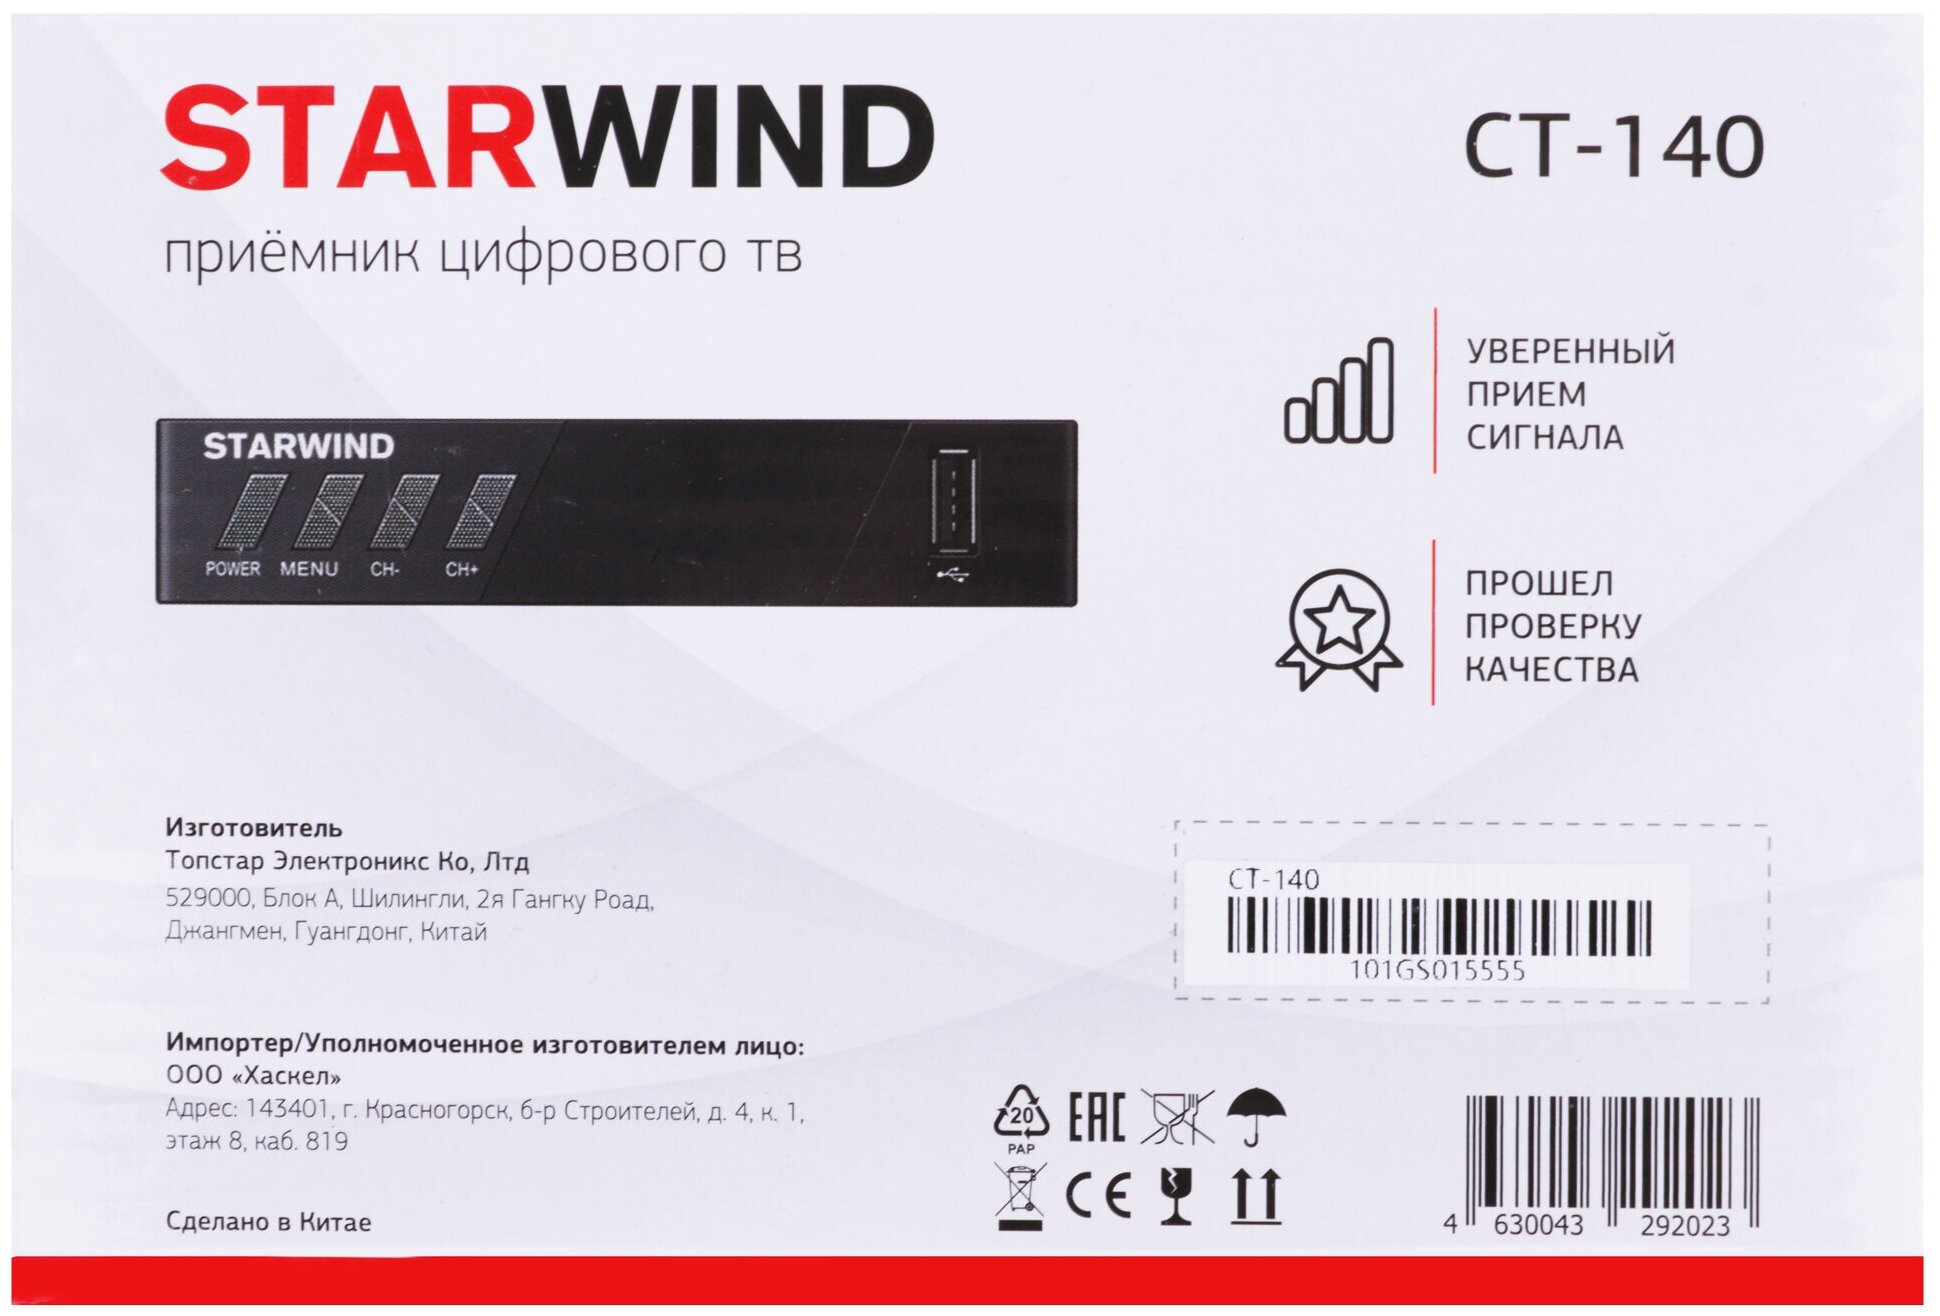 ТВ-тюнер STARWIND CT-140